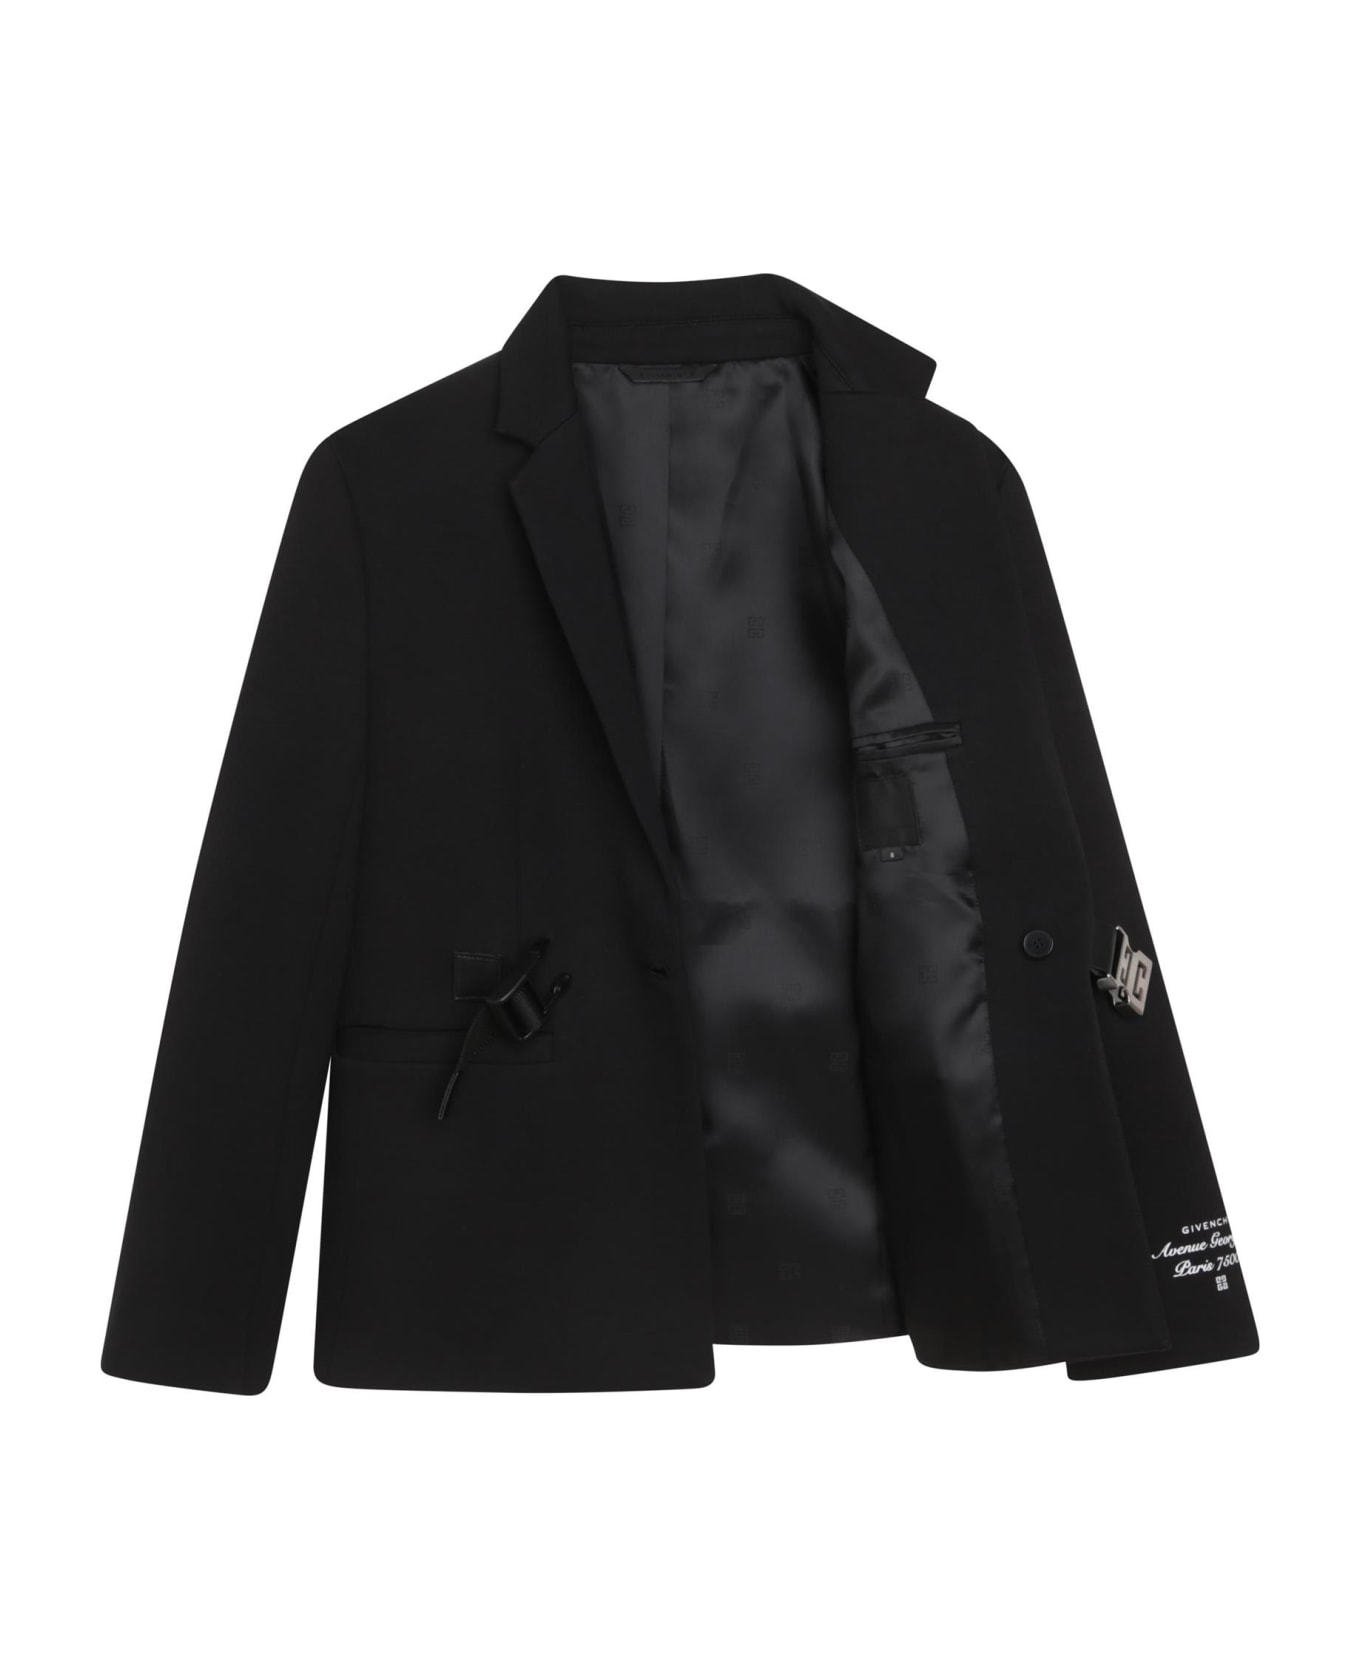 Givenchy Jacket With Logo - Black